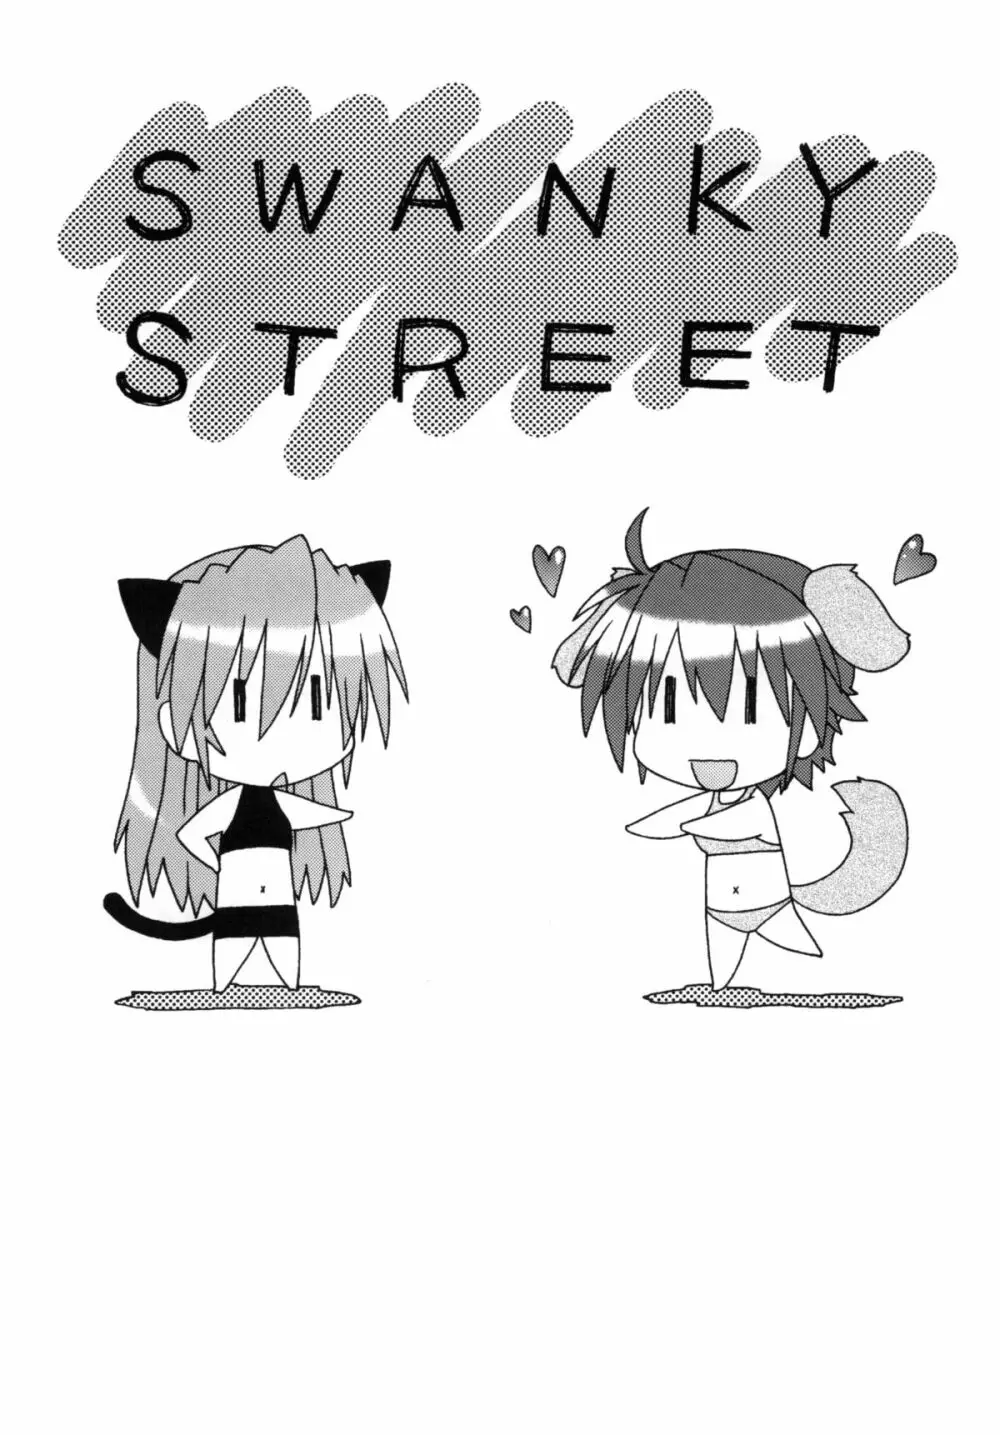 SWANKY STREET - page2